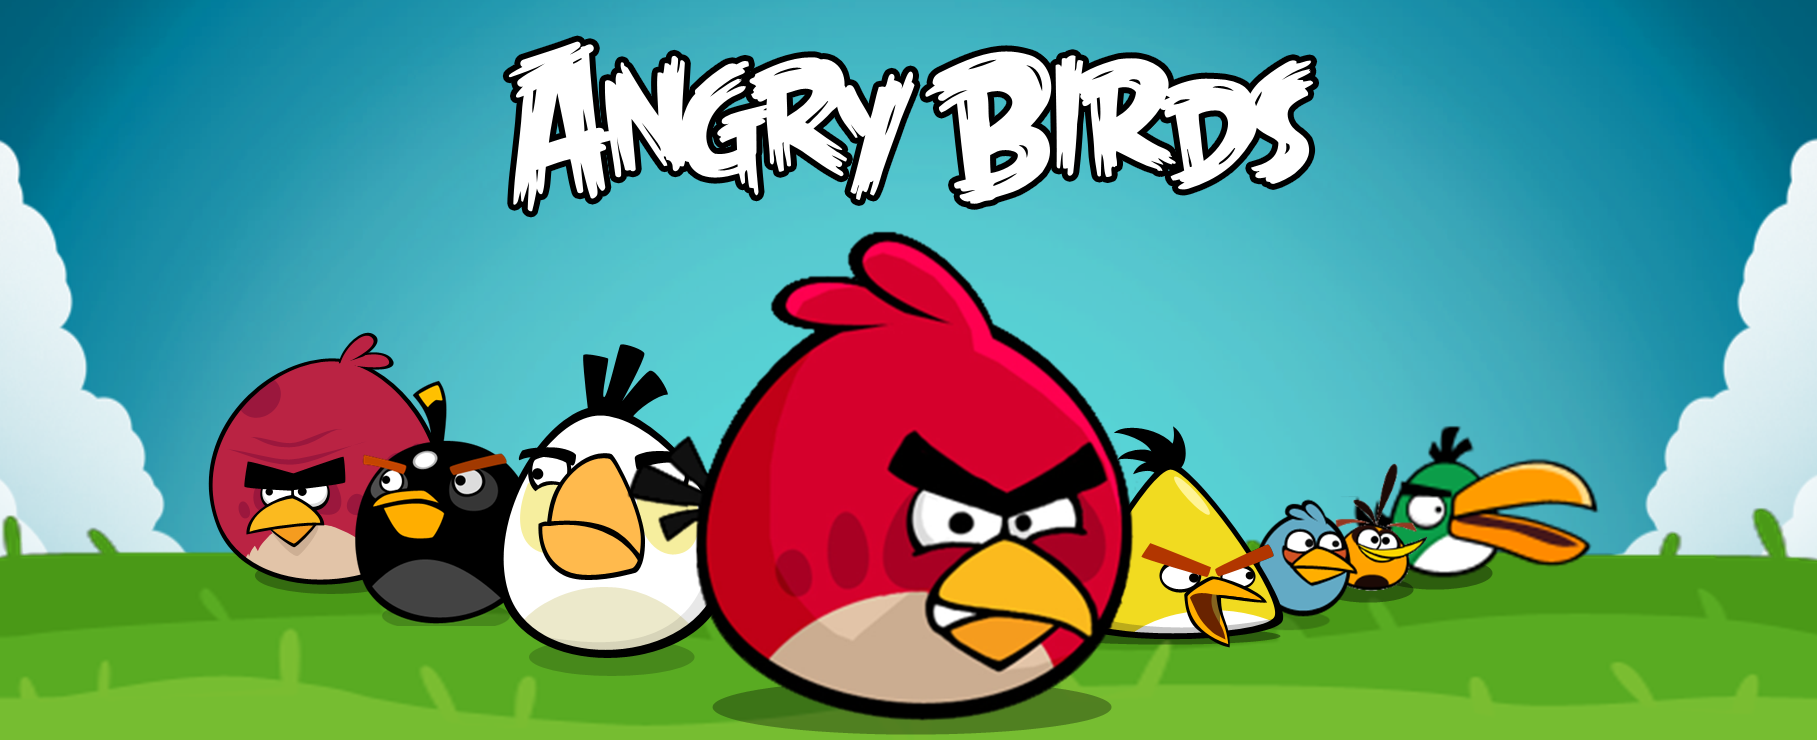 Free download Angry Birds HD Wallpaper Desktop RoyalWallpaperBiz [1817x740] for your Desktop, Mobile & Tablet. Explore Angry Bird Wallpaper for Desktop. Birds Wallpaper Free Download, Angry Birds Wallpaper HD